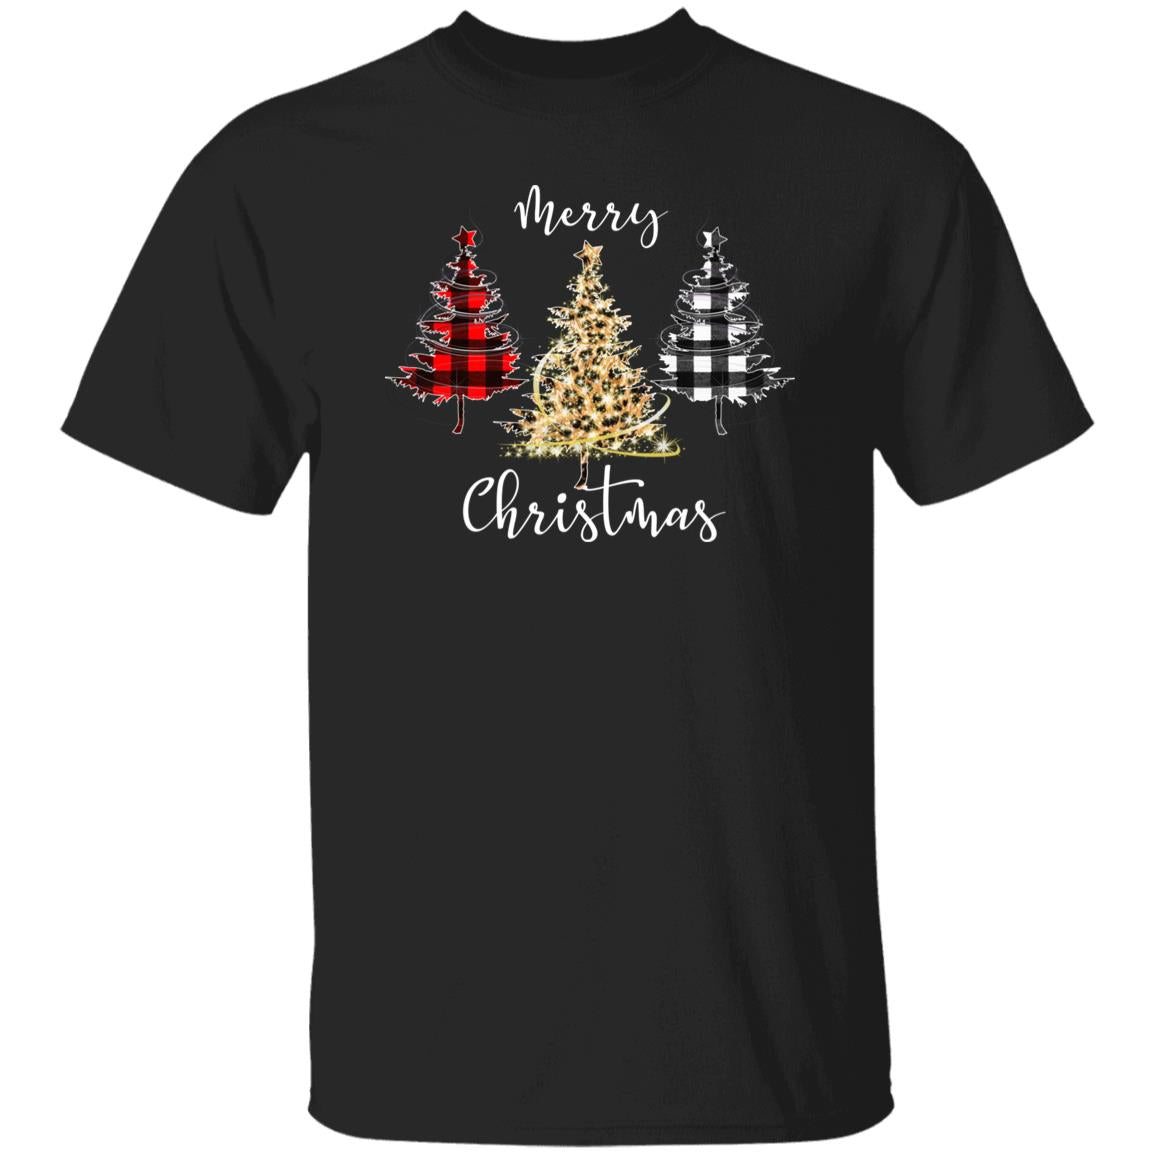 Merry Christmas Unisex shirt cute Holiday trees tee Black Dark Heather-Family-Gift-Planet